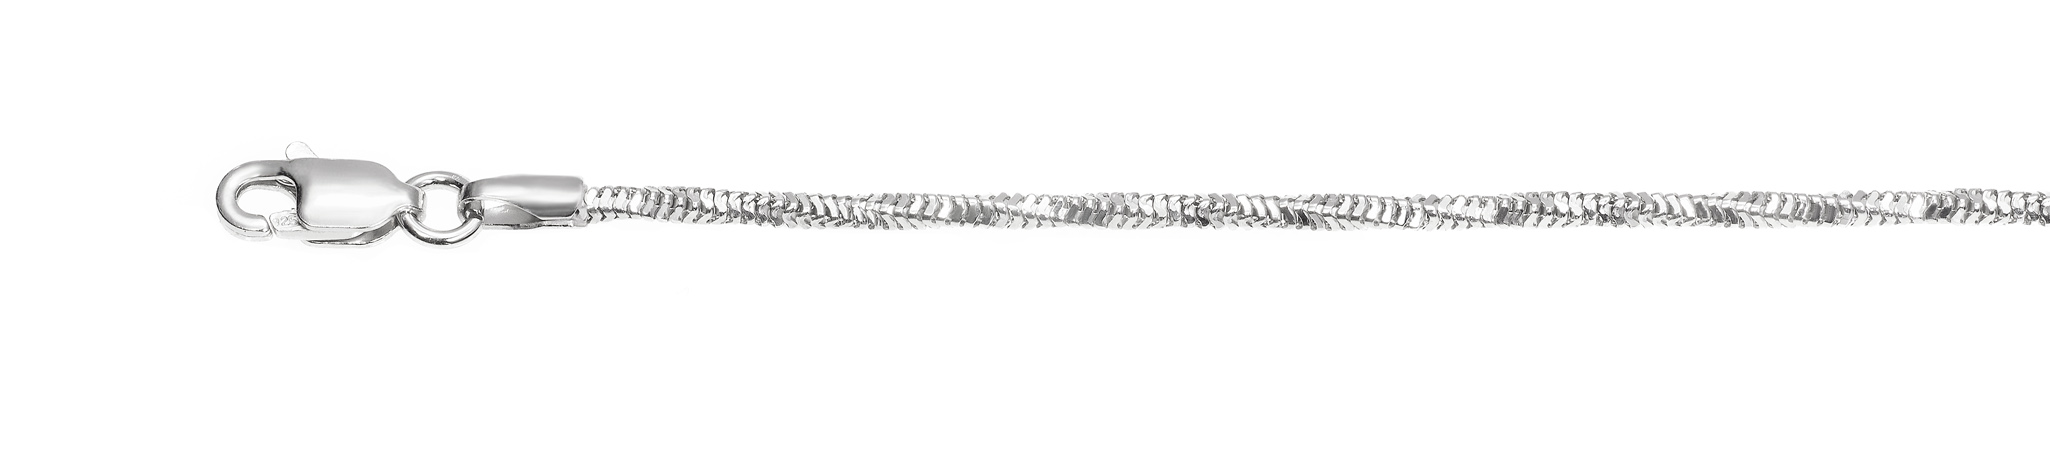 Ref.: 90714 - Diamond cut twisted snake - Wide 1.4